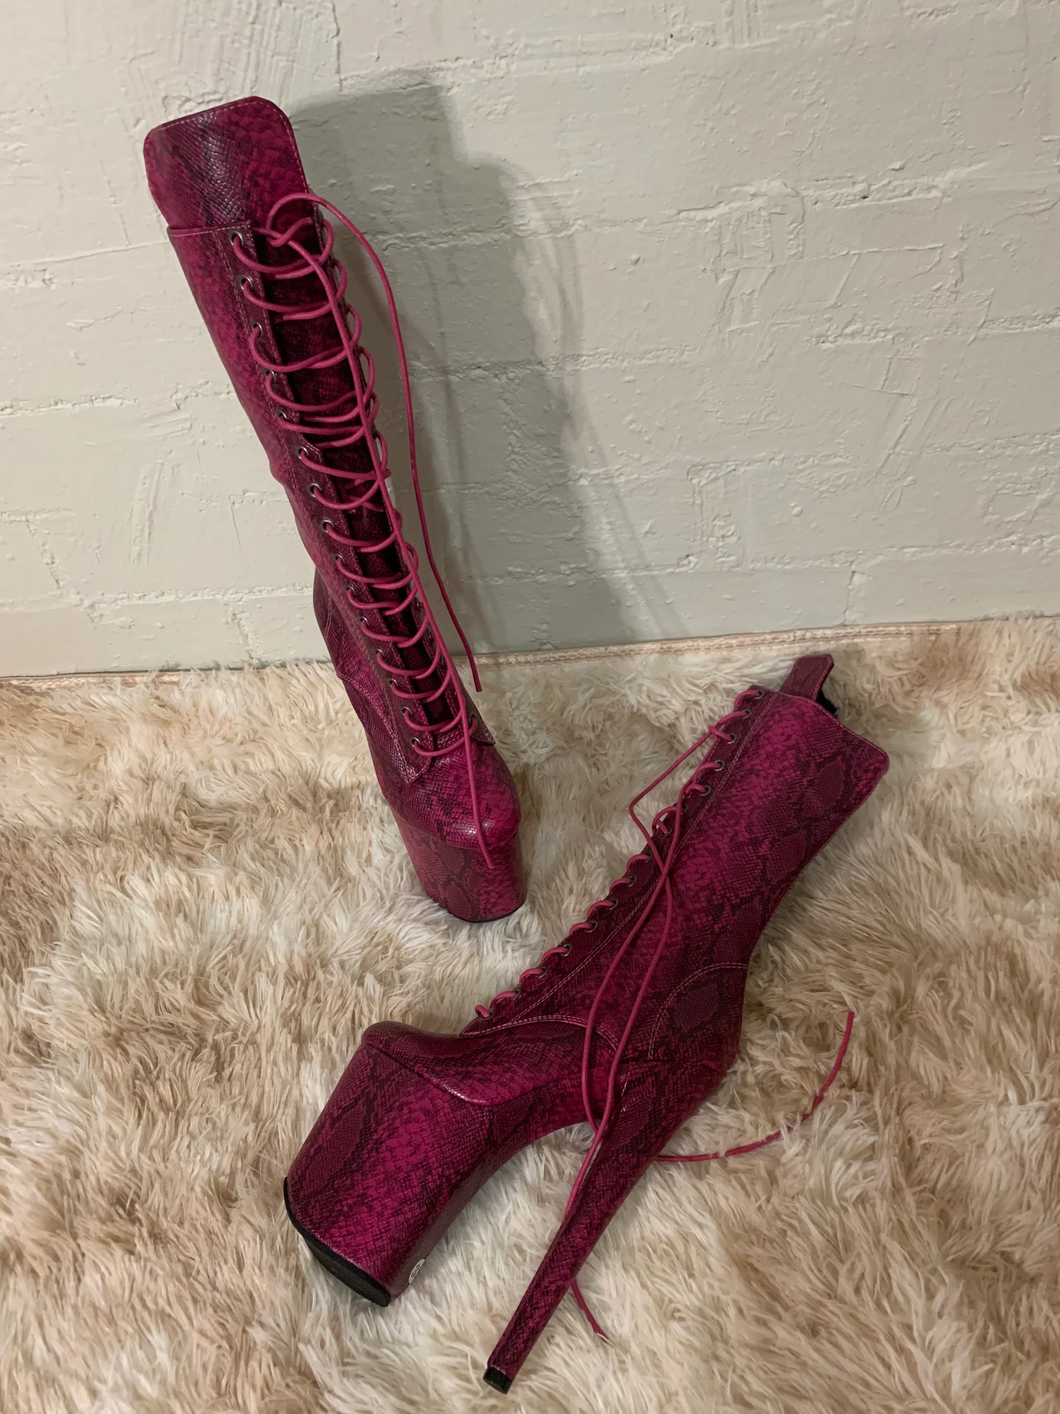 Lily Frog Heels: Medusa Bossy Pink - 8 inch heels - Mid calf boots